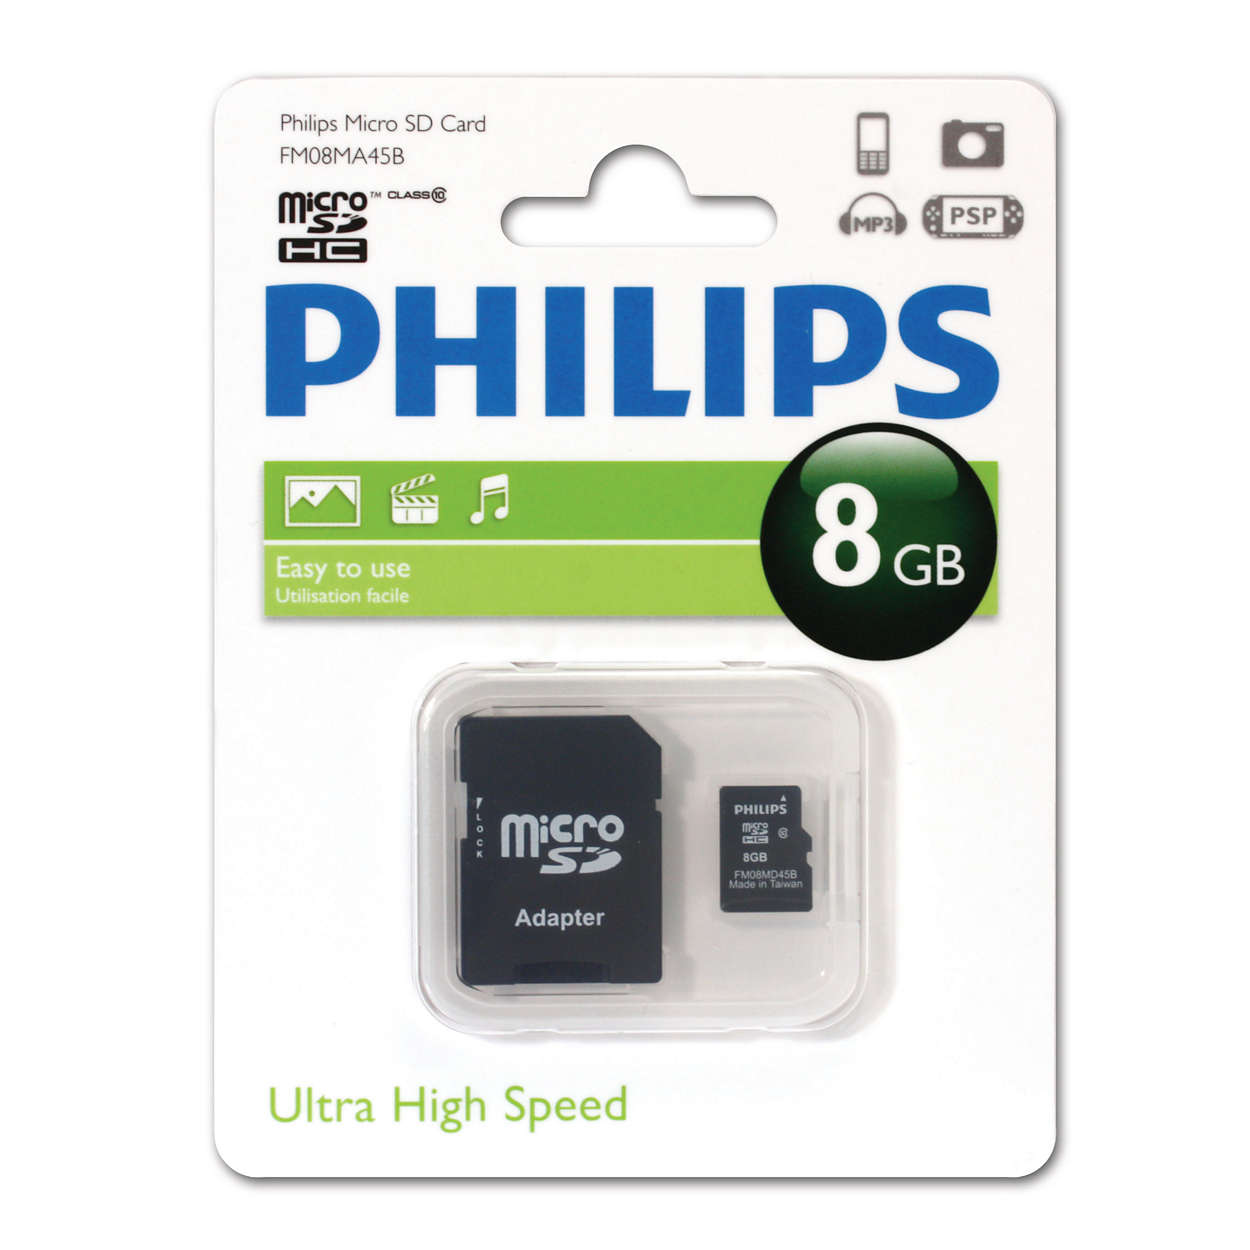 Quilt Polar New arrival Micro SD cards FM08MA45B/27 | Philips